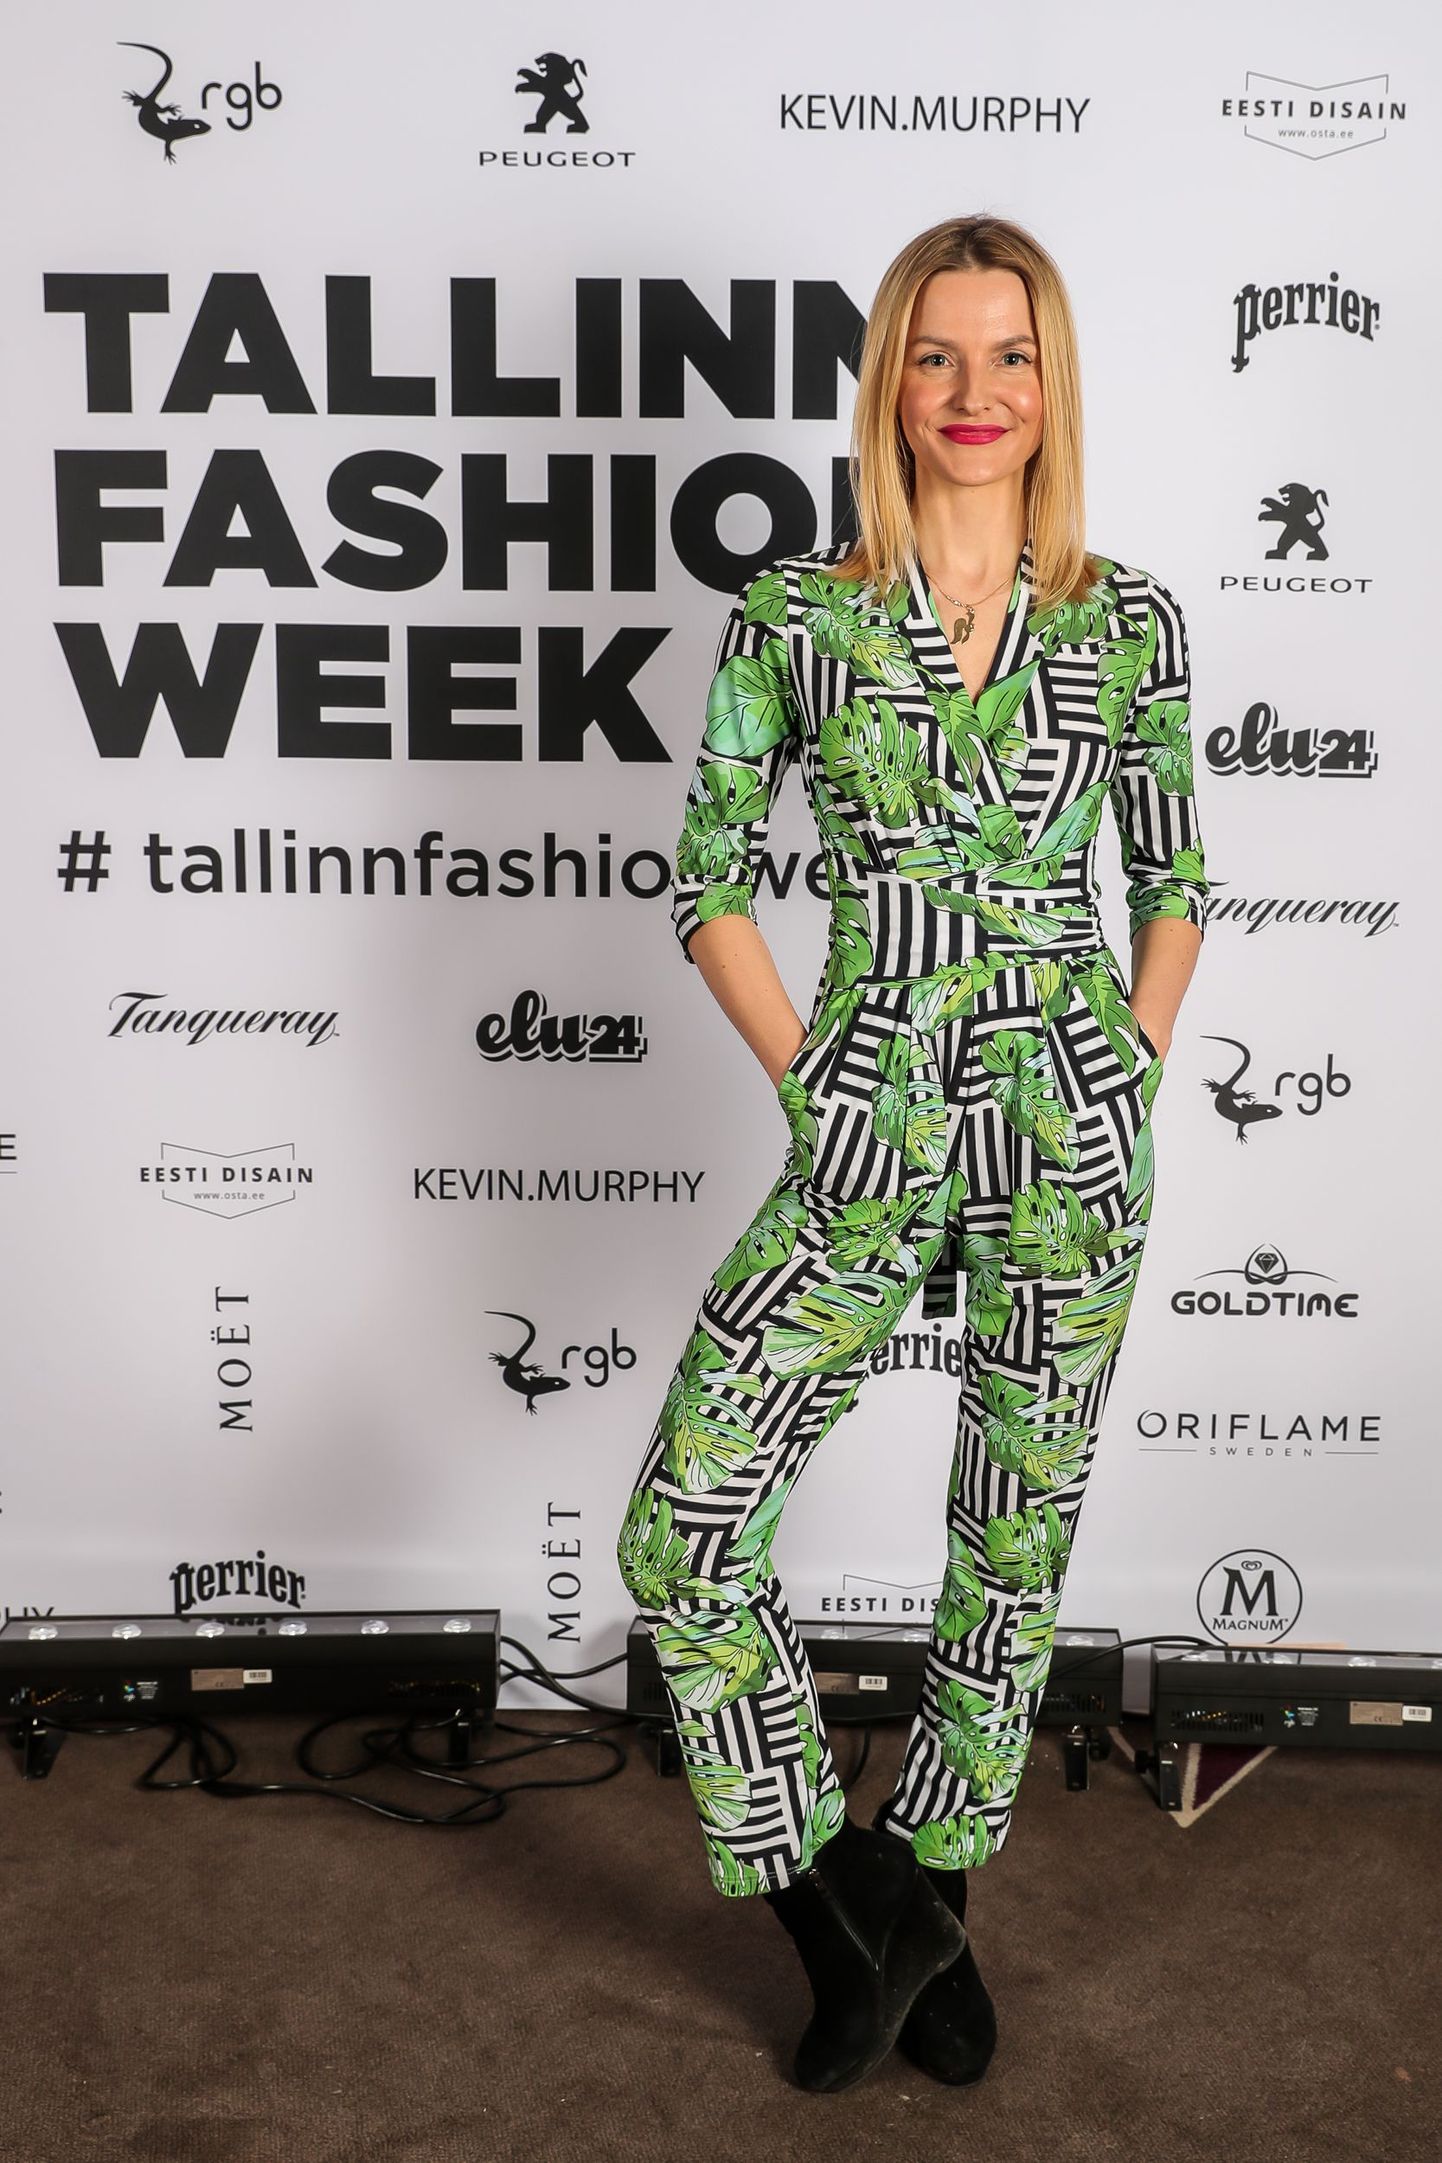 Tallinn Fashion Week 17.03.2017 Fotosein ja melu.
Mari Martin